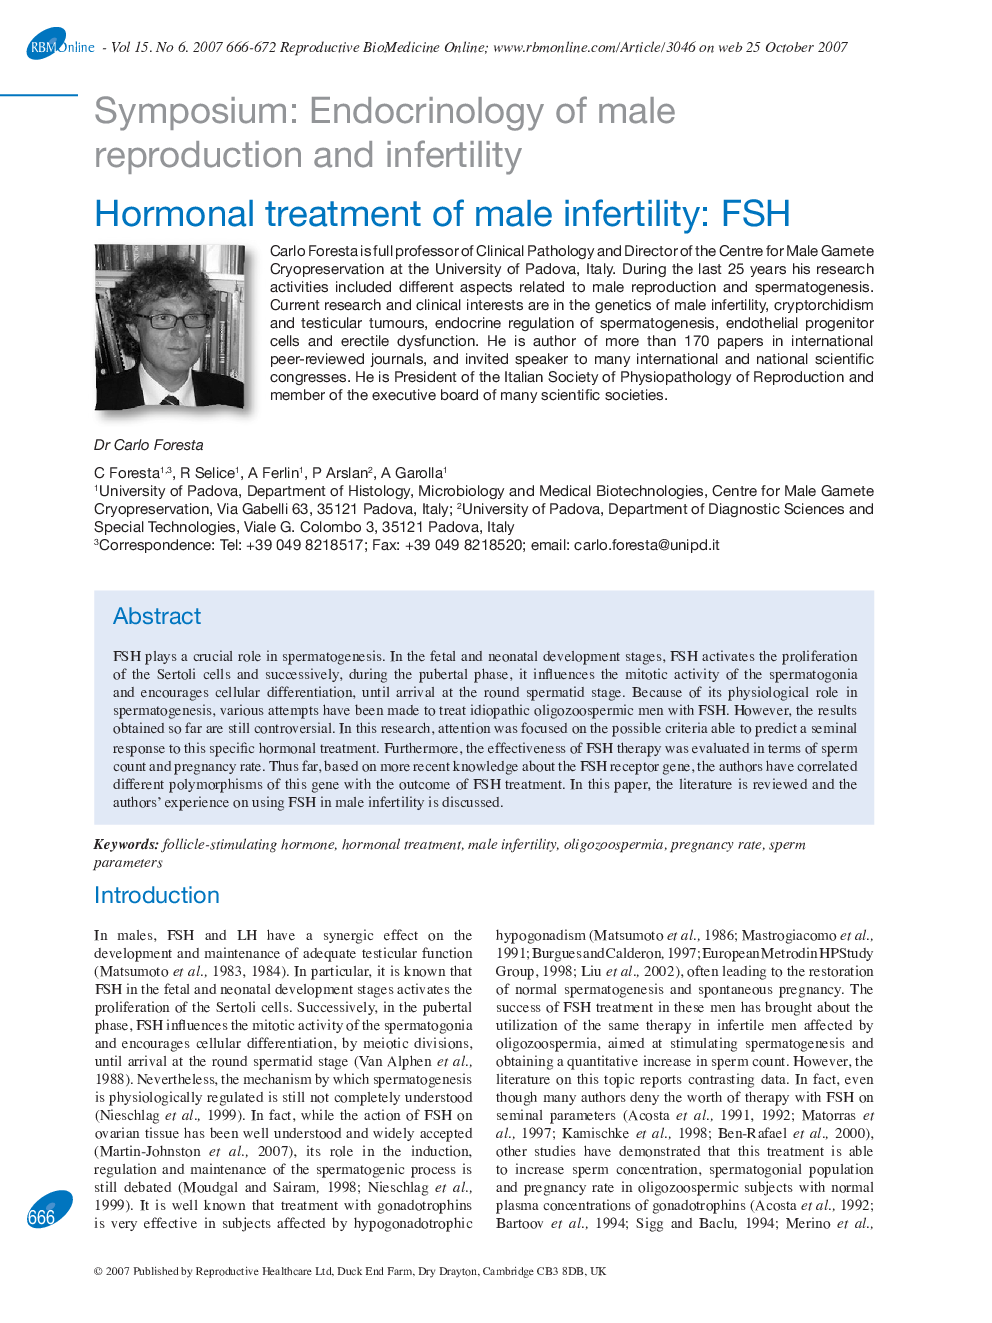 Hormonal treatment of male infertility: FSH 